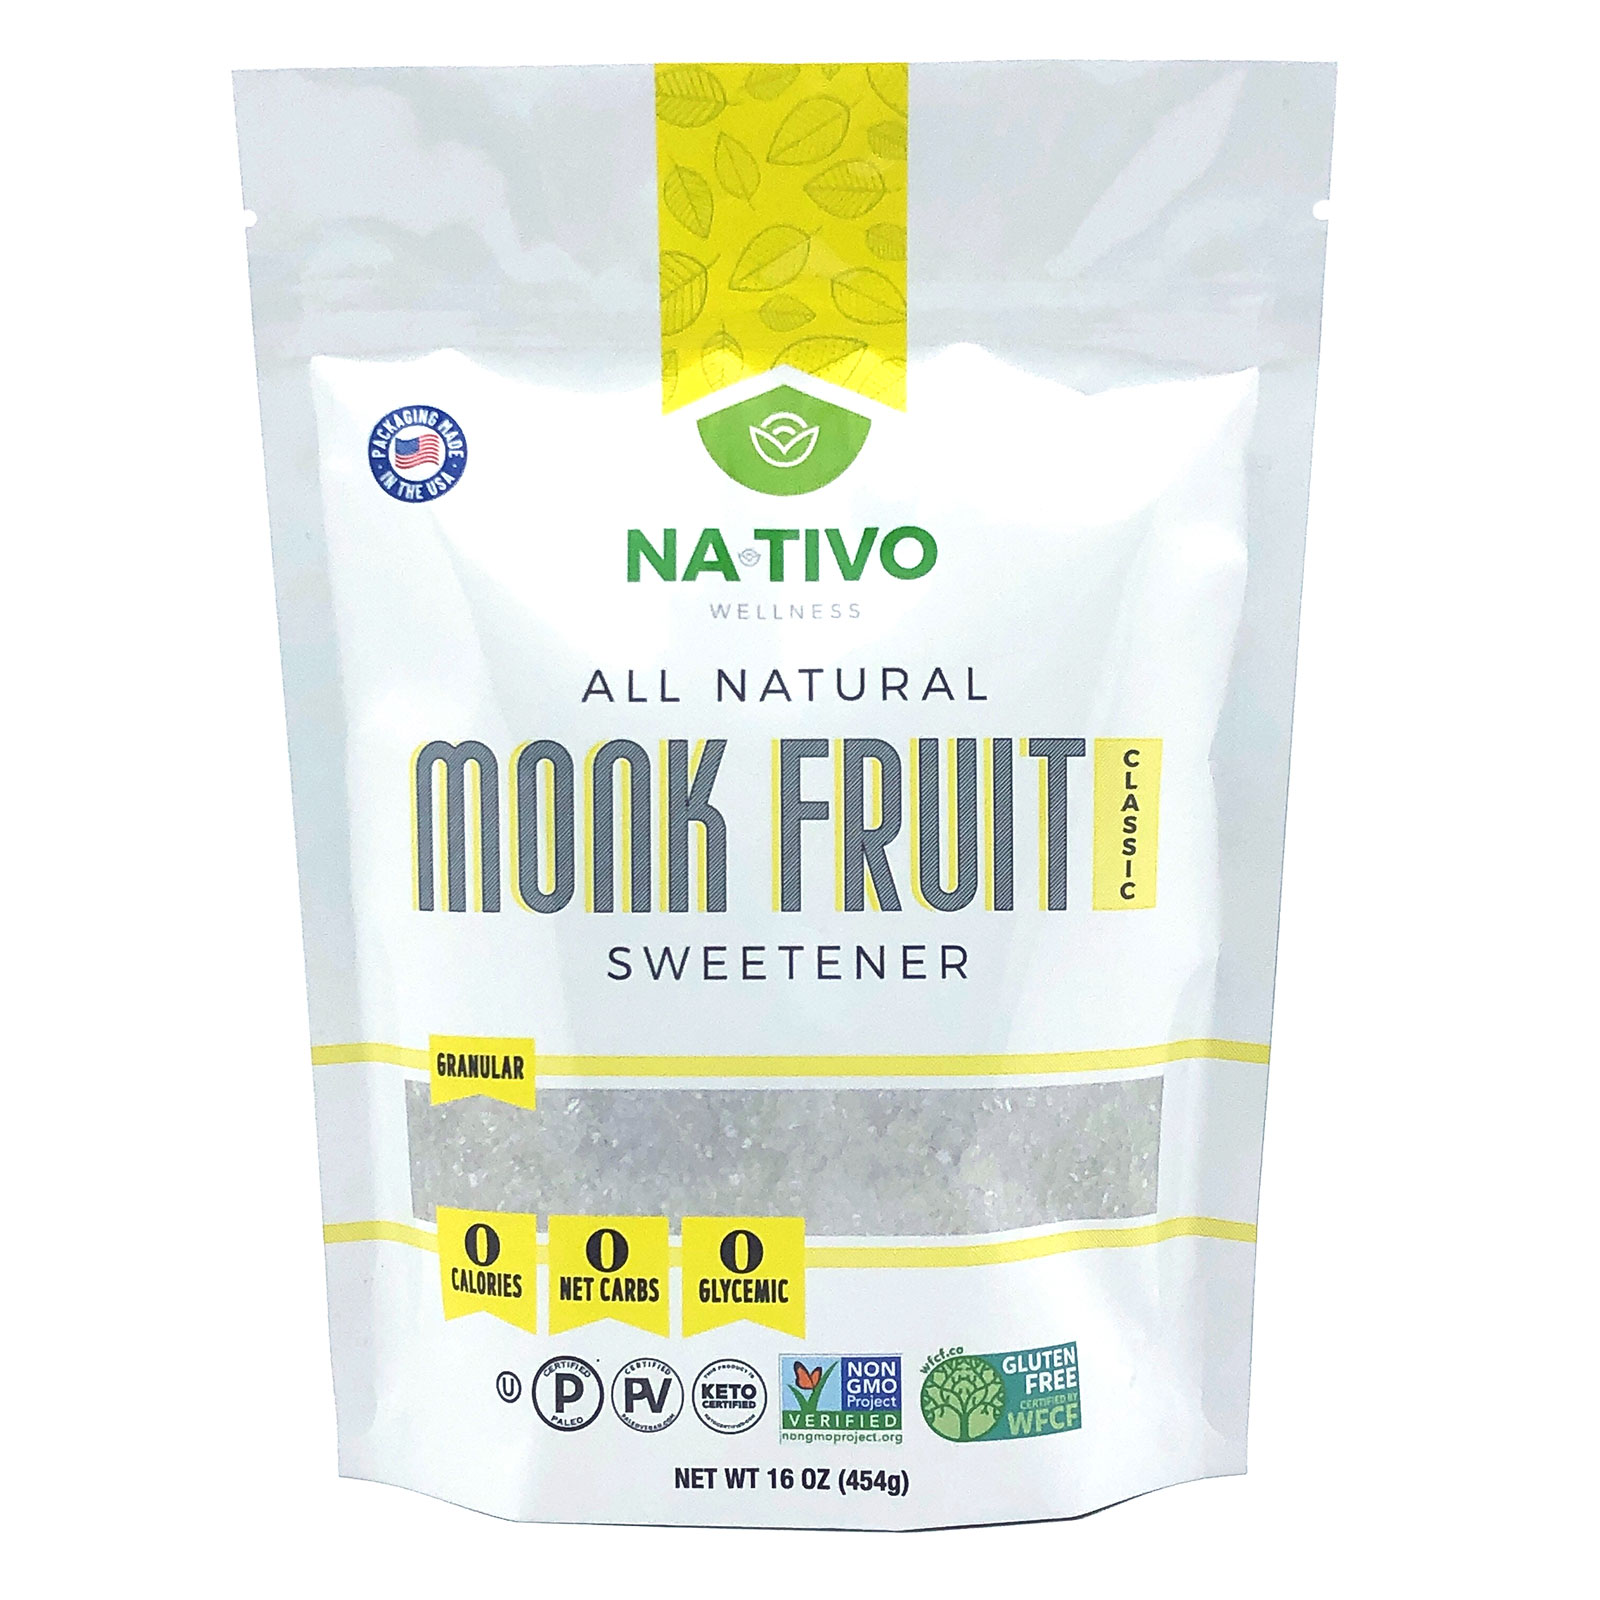 NaTivo All Natural Monk Fruit Classic Sweetener 12 units per case 1.0 lb